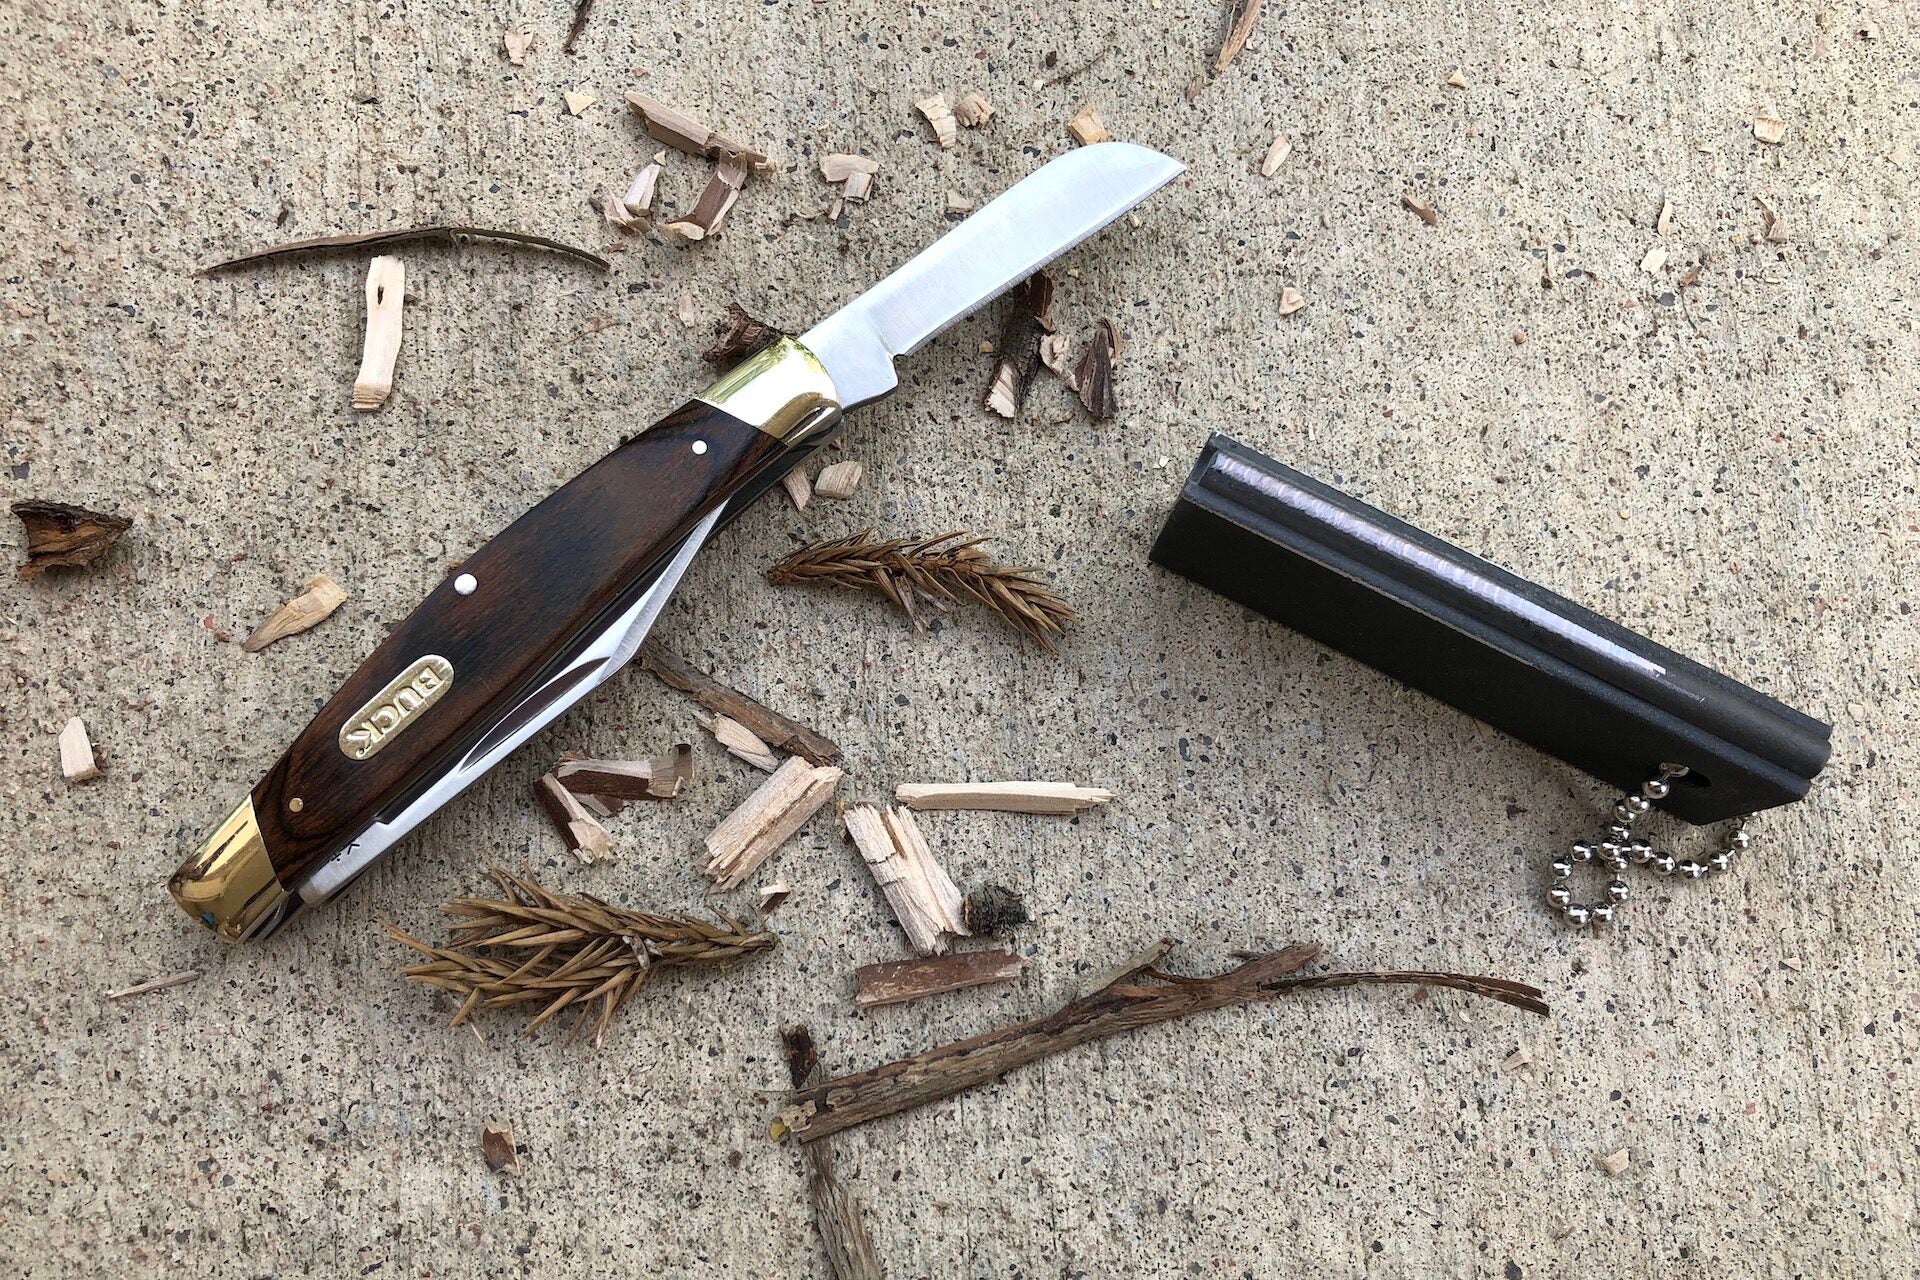 Review: the Buck 371 Stockman is a concrete cowboy’s EDC knife